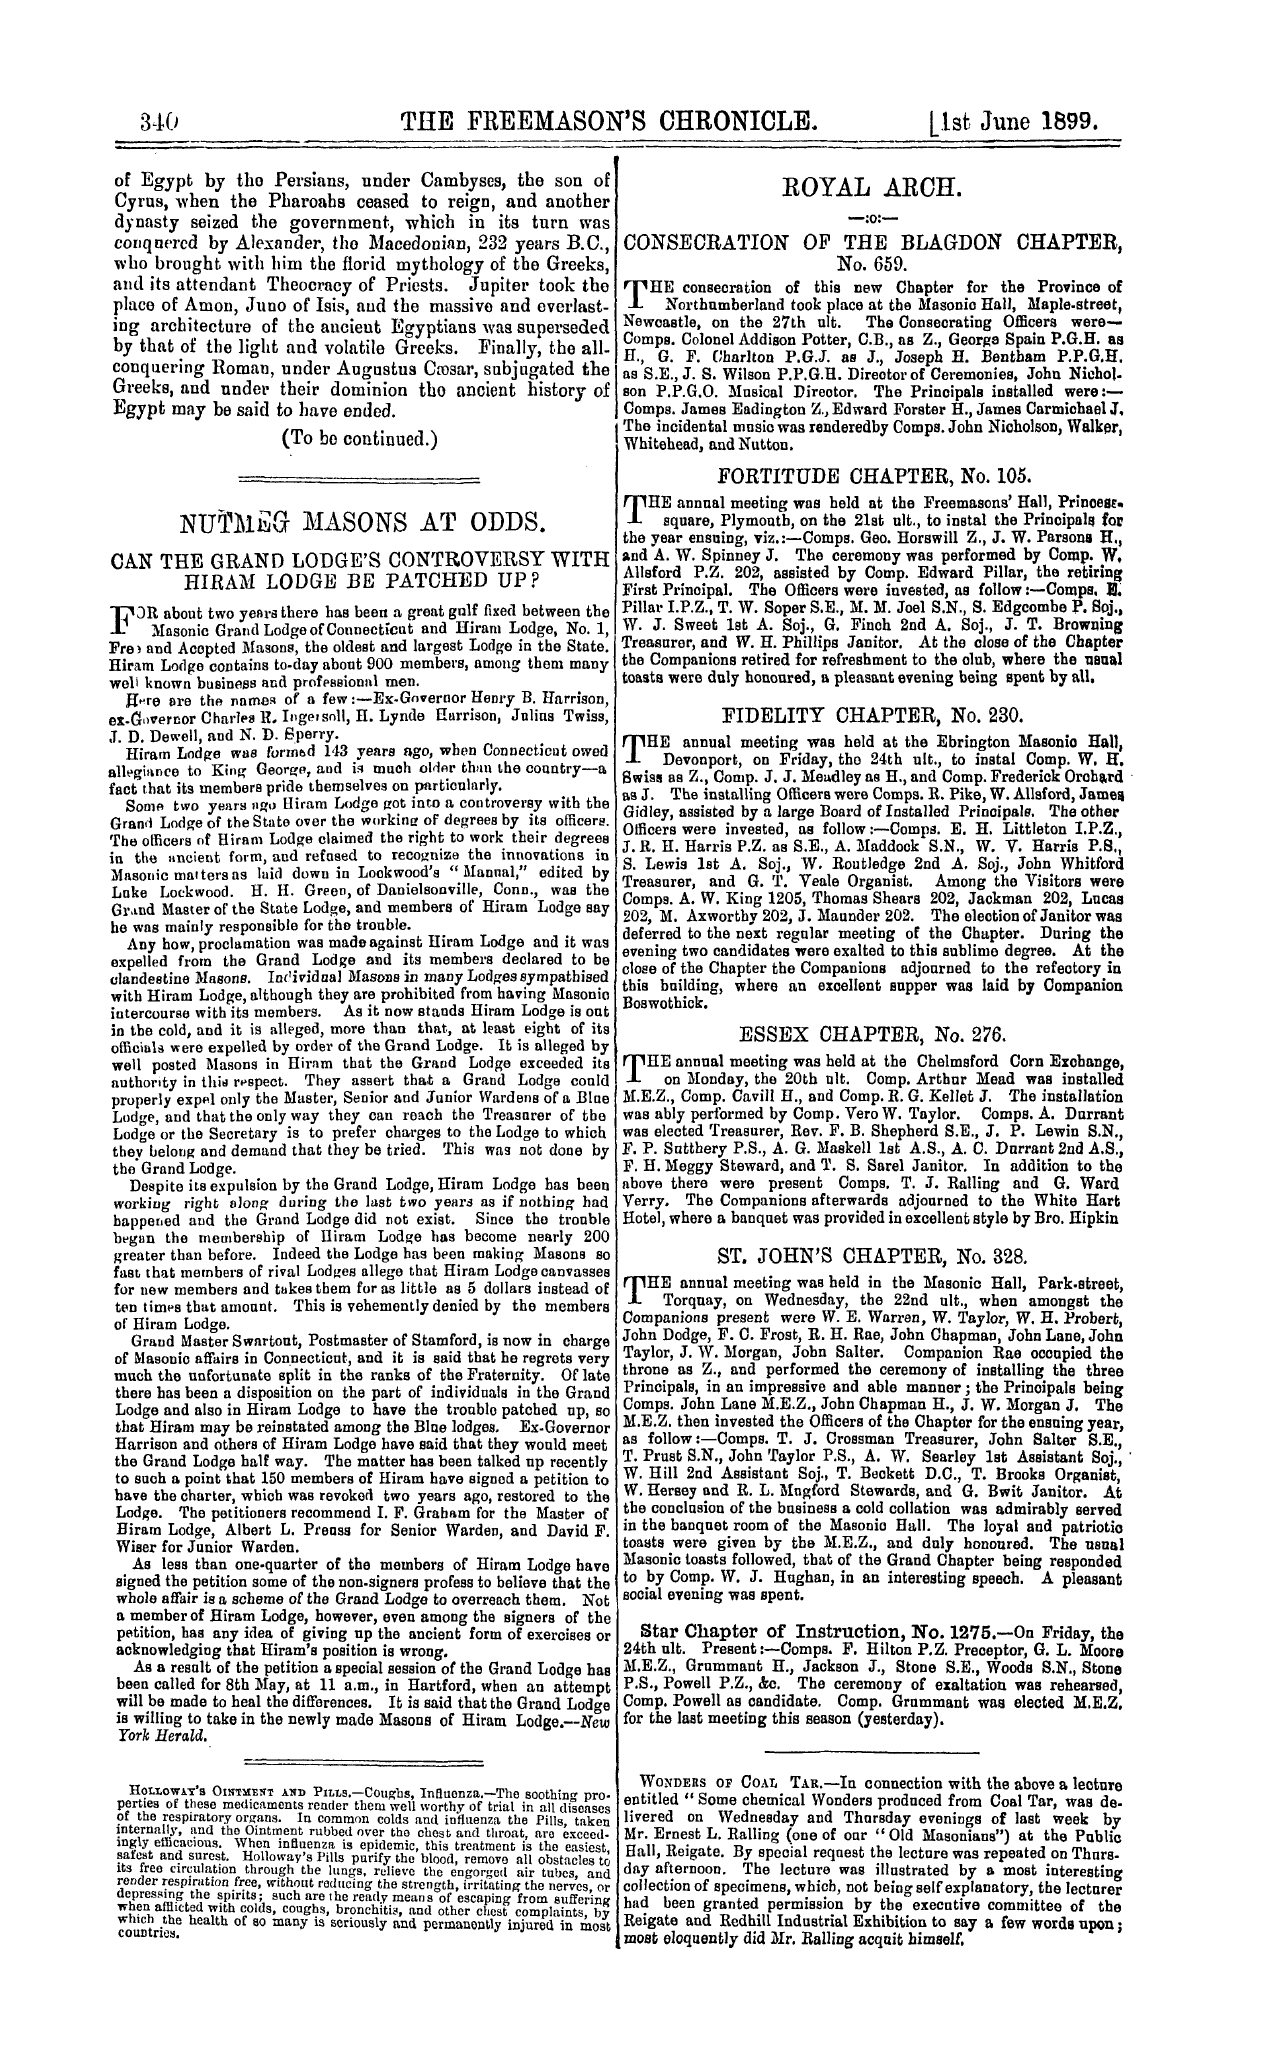 The Freemason's Chronicle: 1889-06-01 - Royal Arch.